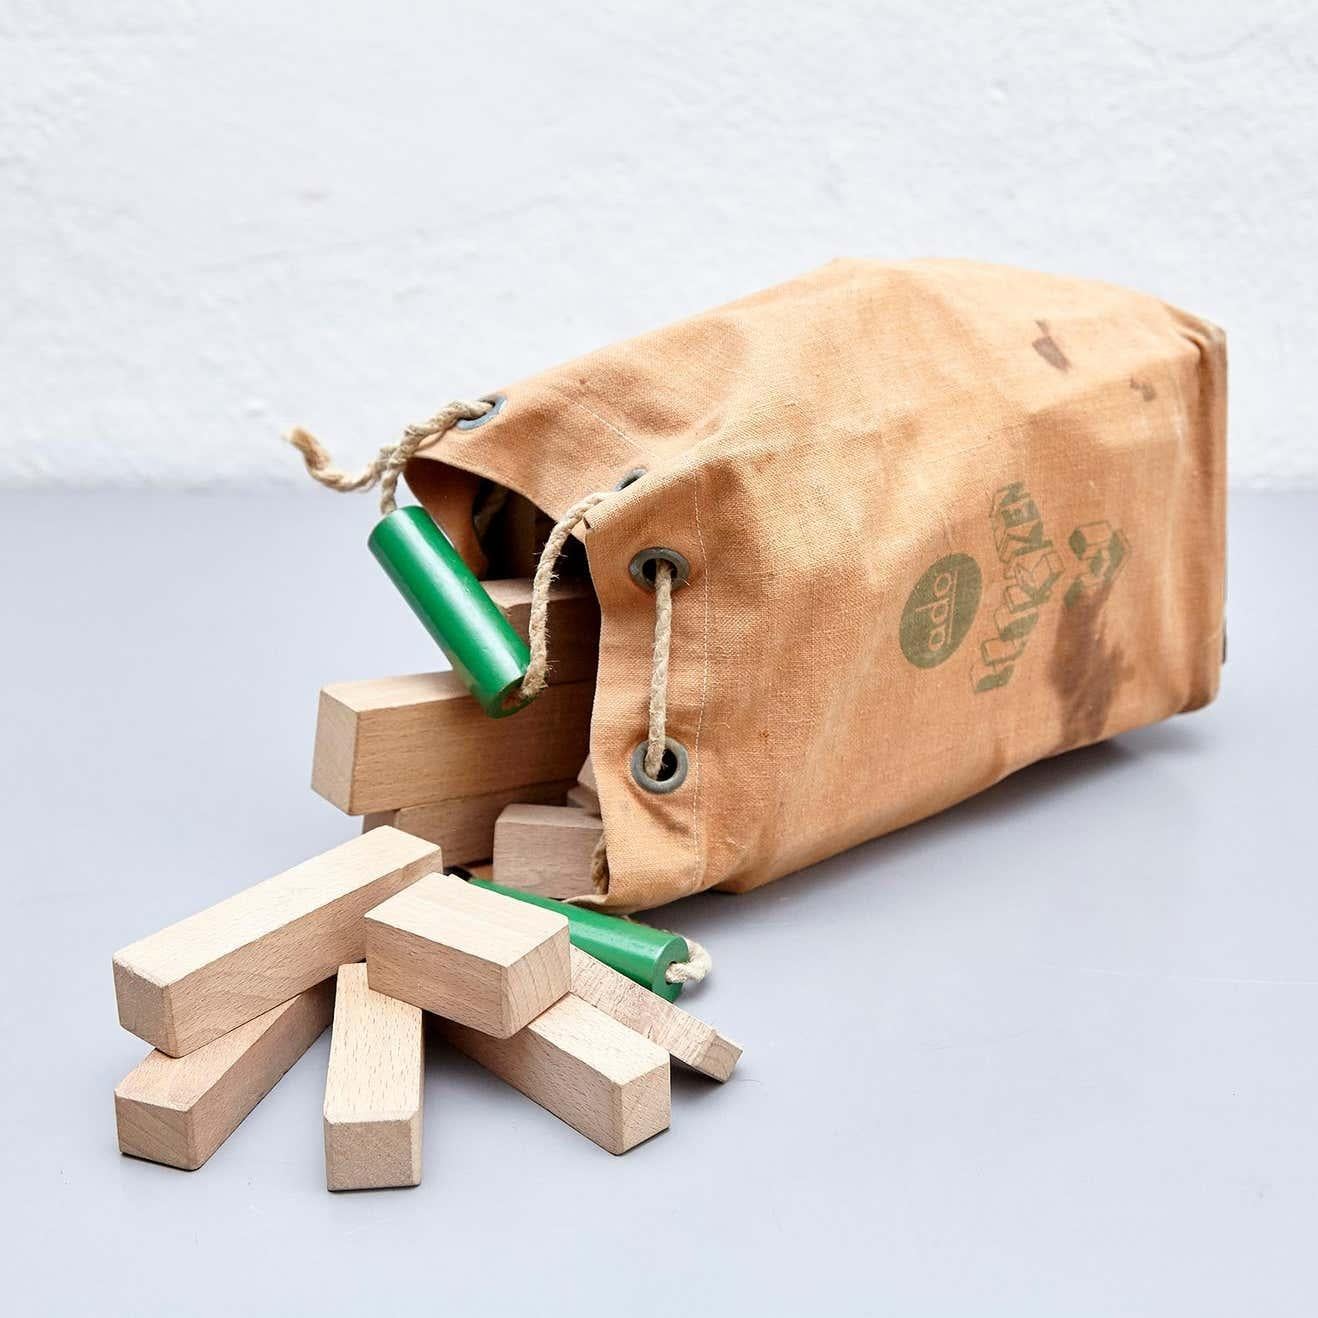 Mid-20th Century Ko Verzuu for Ado, Mid-Century Modern, Wood Blocks Construction Netherlands Toy For Sale